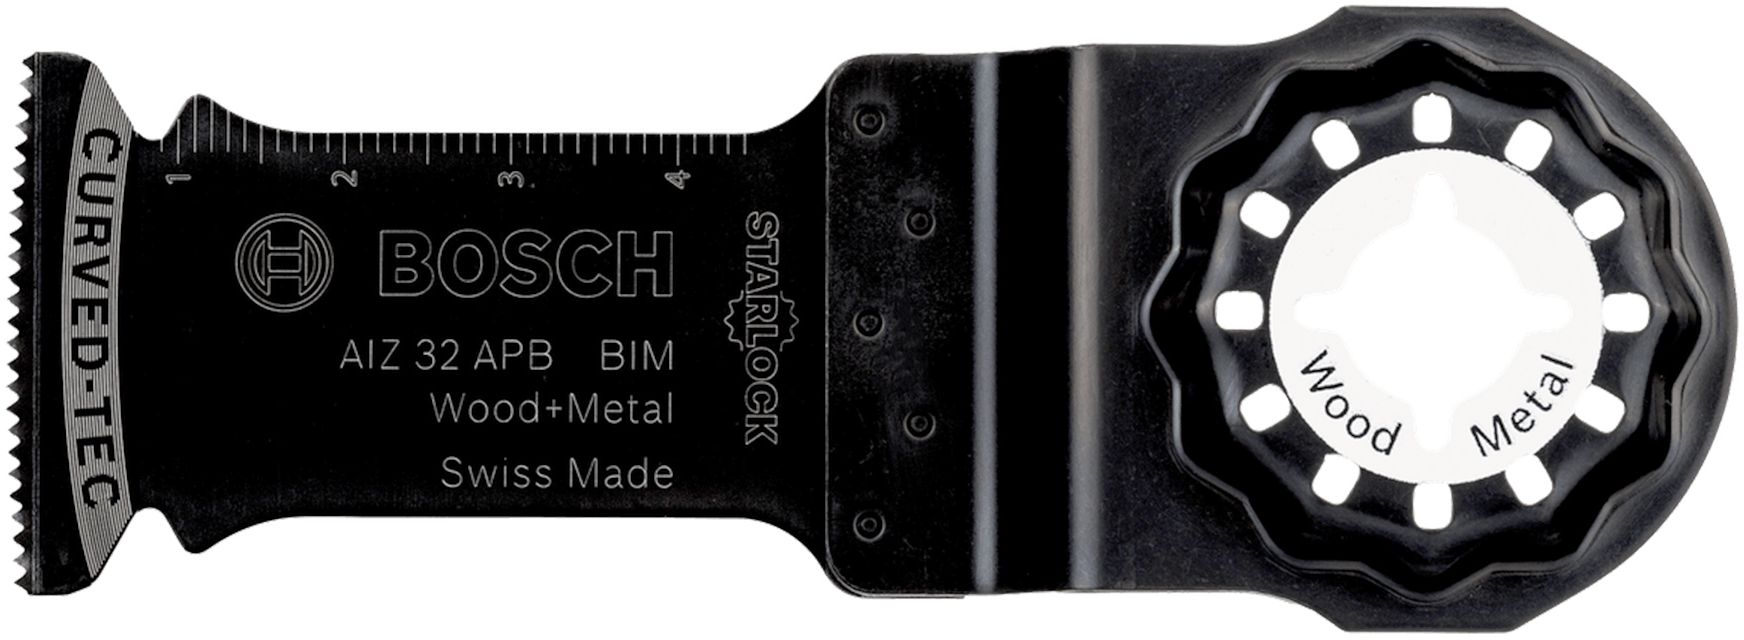 BIM Tauchsägeblatt W+M, AIZ32 APB 50 x 32mm, 2 608 661 902 - Bosch Maschinenzubehör